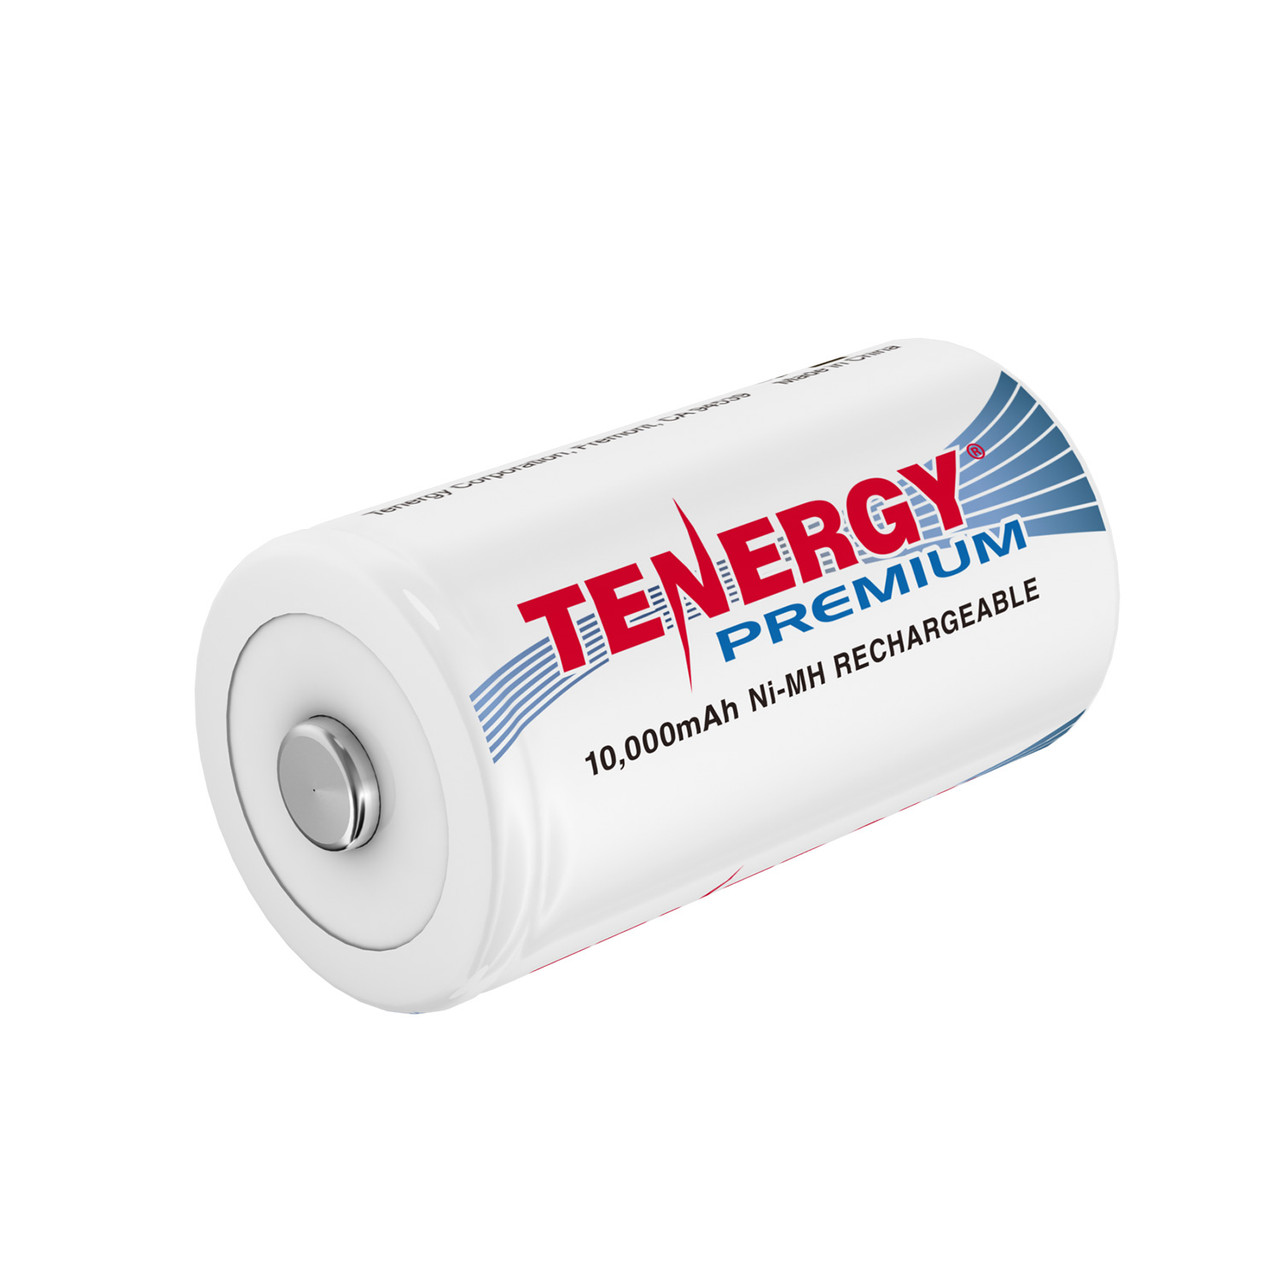 Tenergy Premium D 10,000mAh NiMH Rechargeable Battery